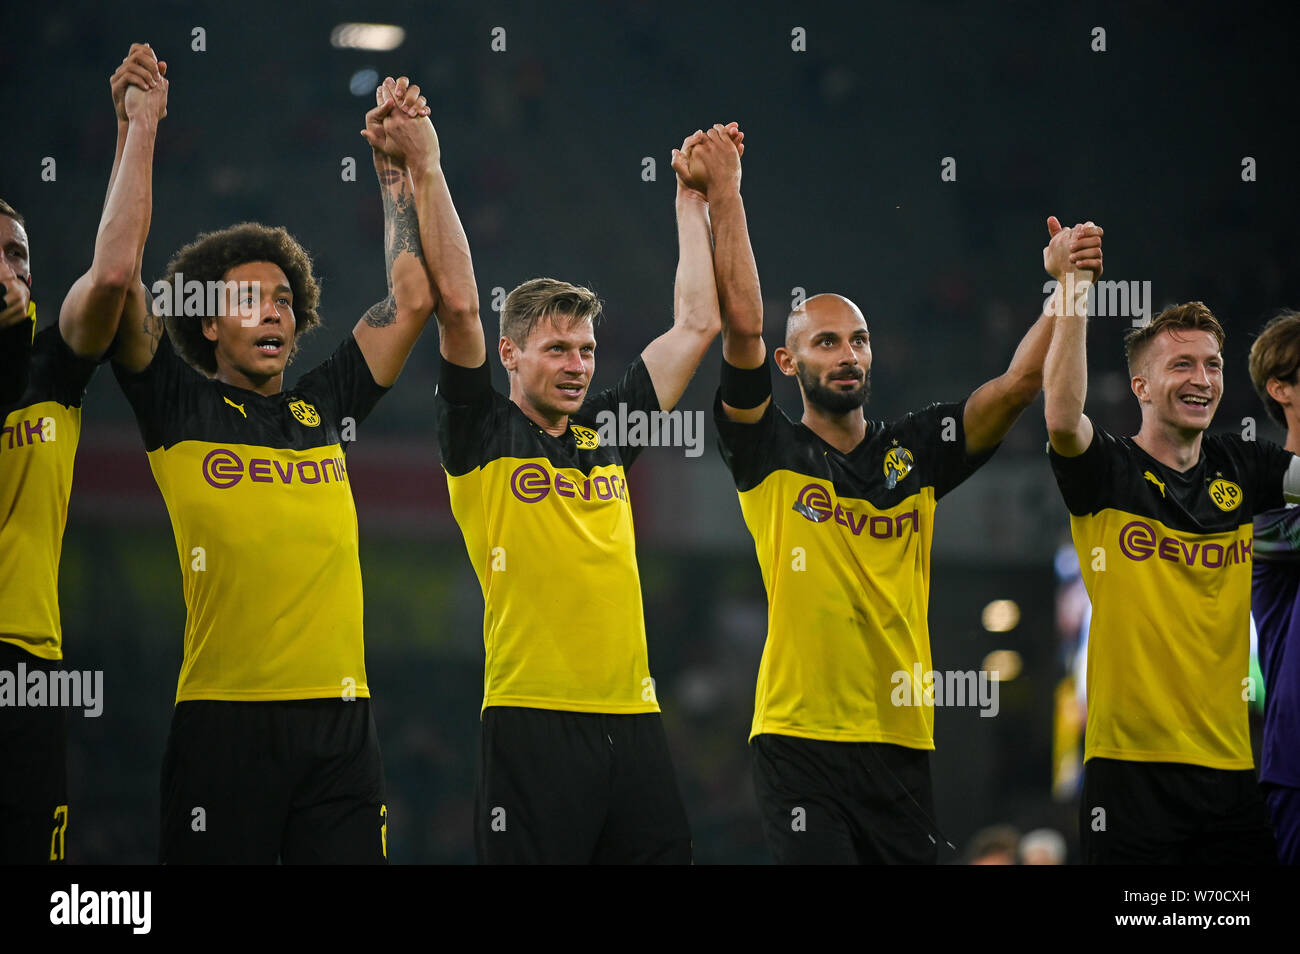 Axel Witsel, Lukasz Piszczek, Omer Toprak and Marco Reus from Borussia Dortmund are seen after winning the Germany Supercup Final 2019 match between Borussia Dortmund and Bayern Munich. Stock Photo